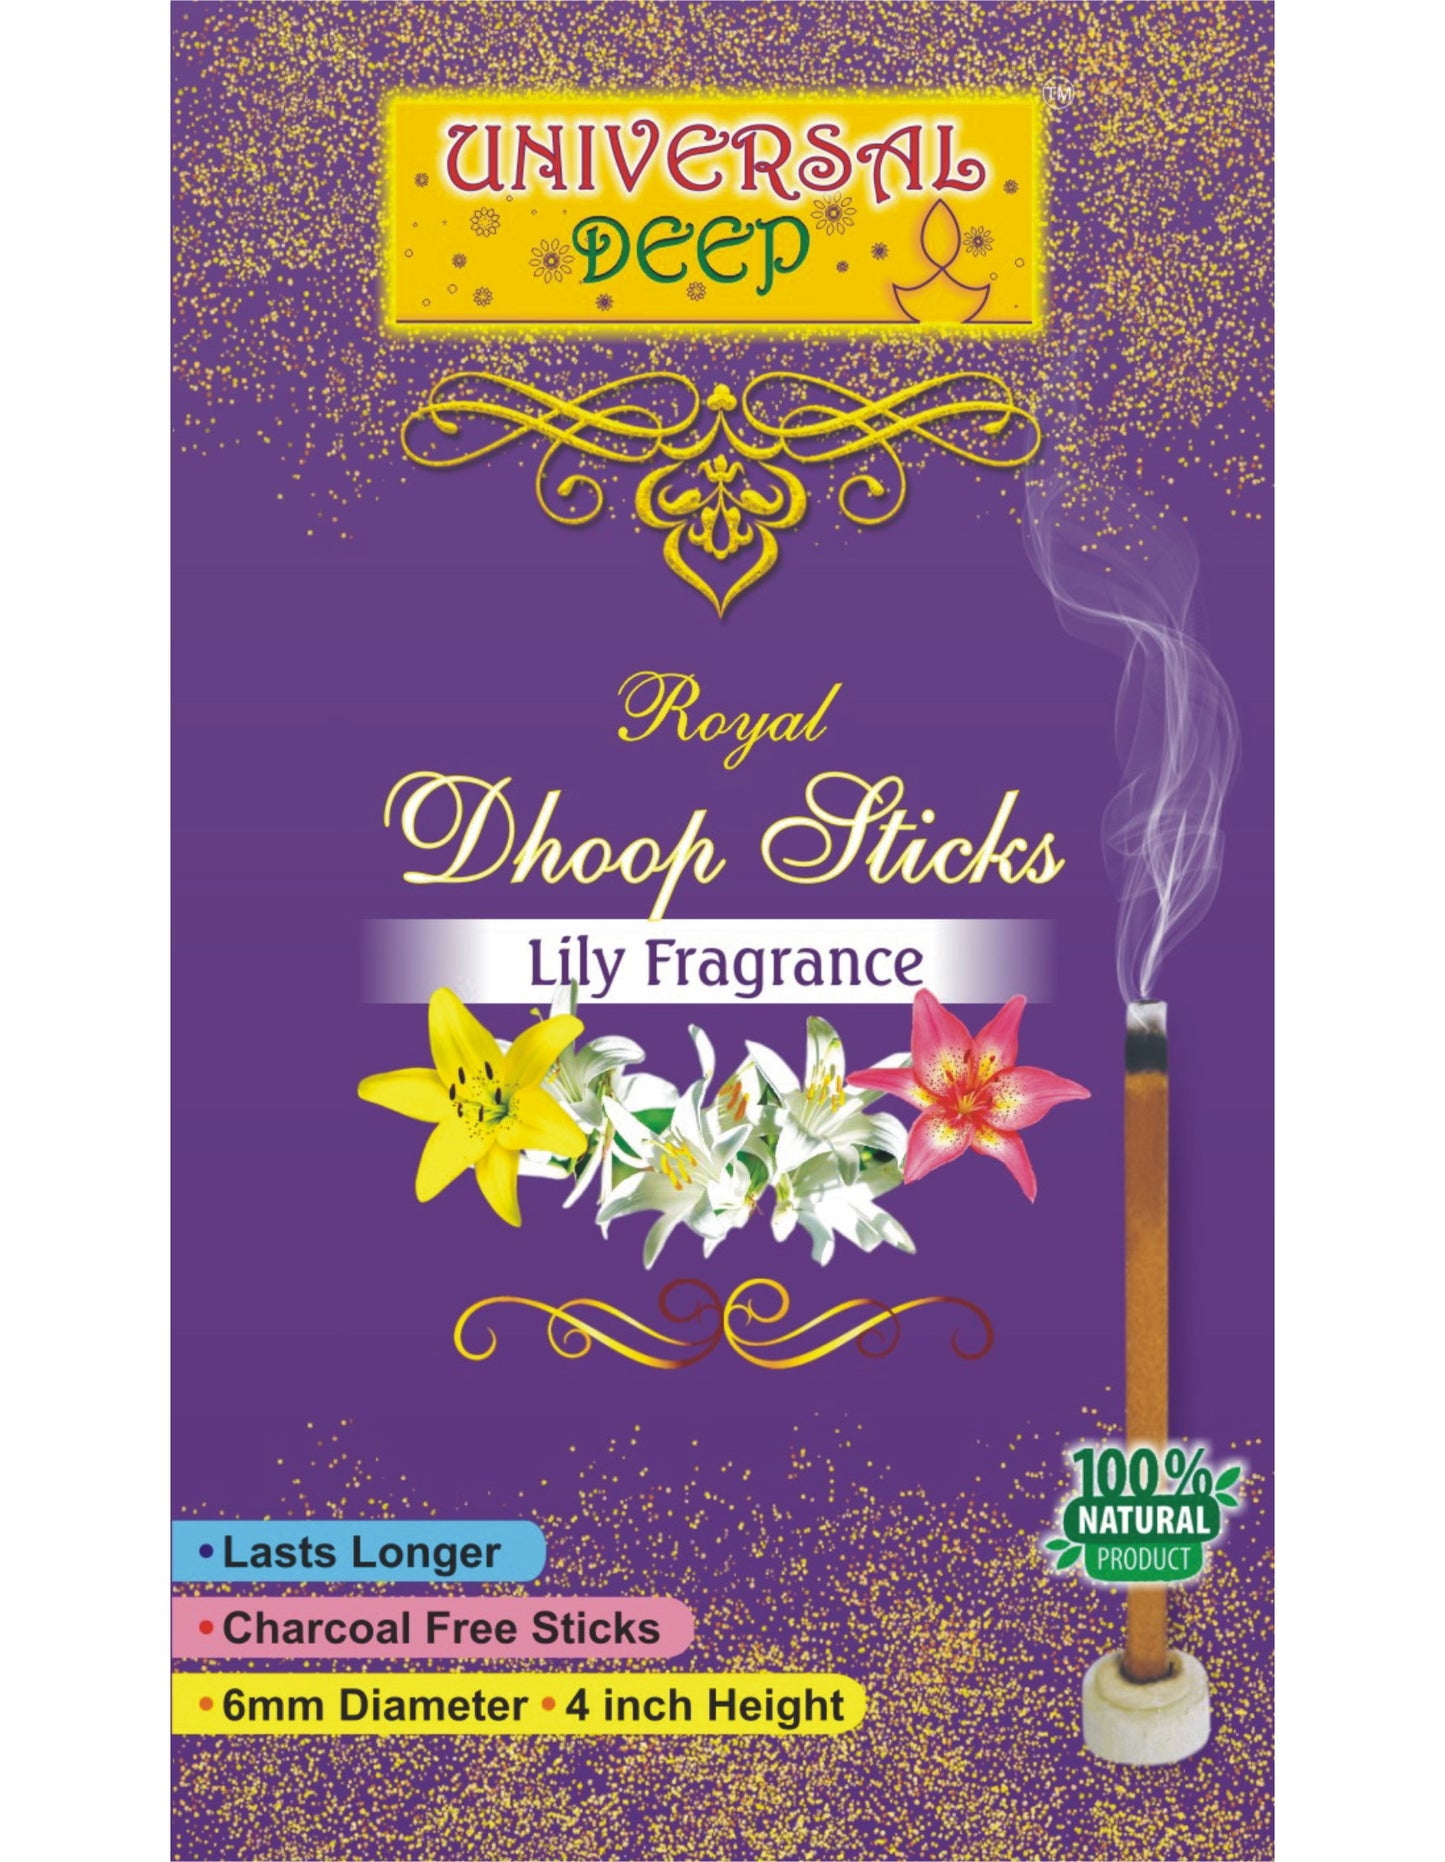 Universal Deep Dhoop Sticks, 4inch Height-6mm Diameter, 20 Pcs. Pack, Long Lasting, Aromatic Fragrance